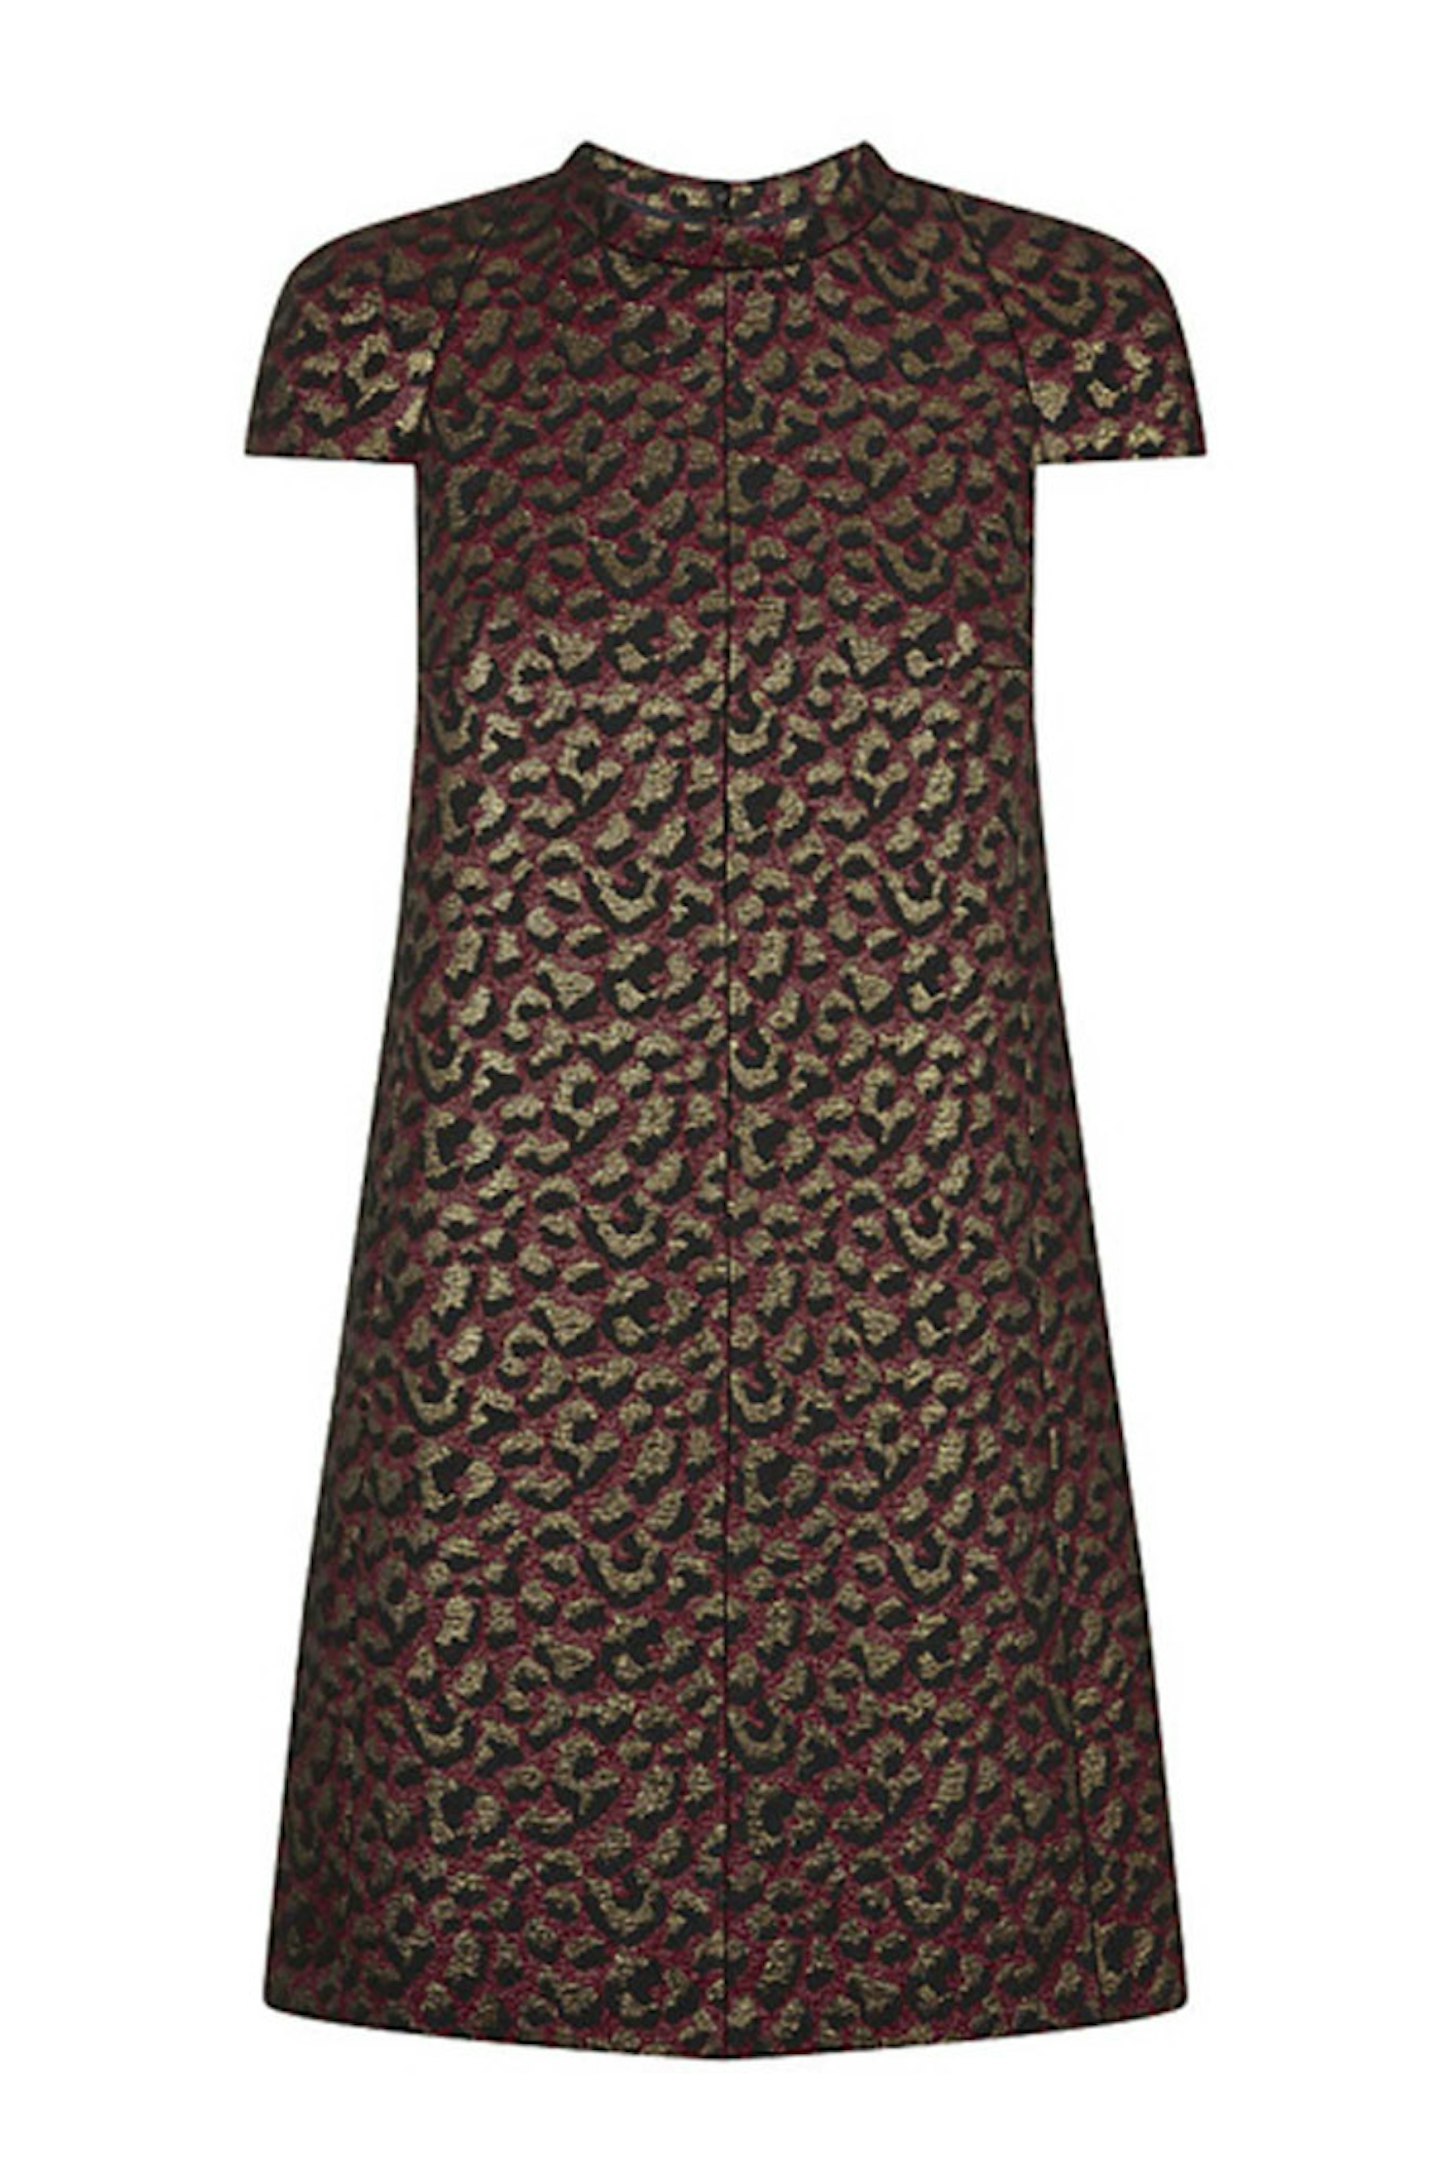 41. Jaquared Leopard Dress, £1425, Saint Laurent at Harrods